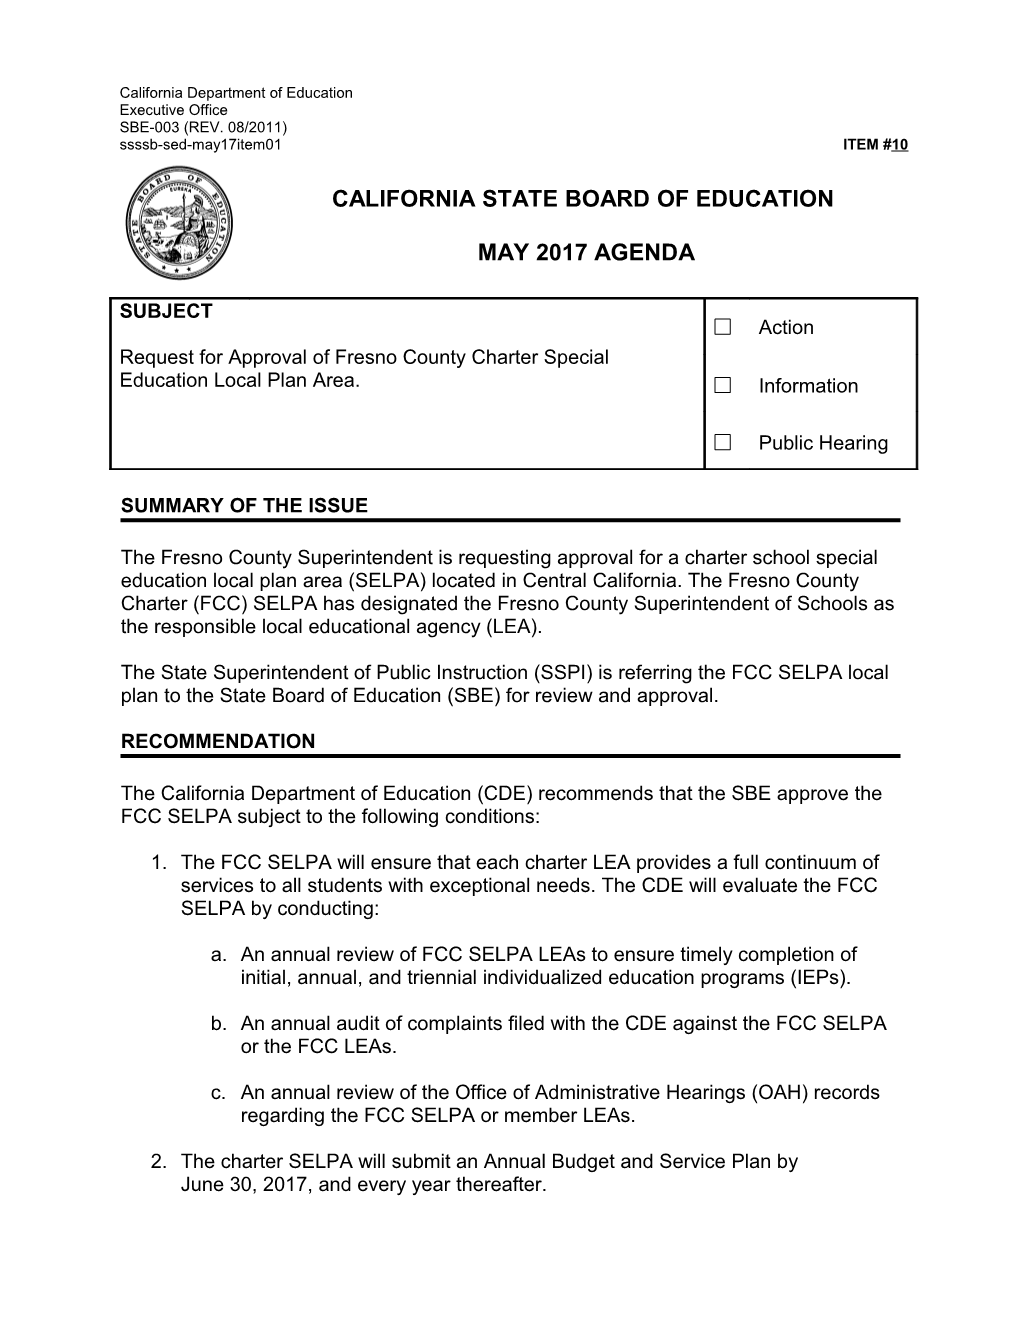 May 2017 Agenda Item 10 - Meeting Agendas (CA State Board of Education)